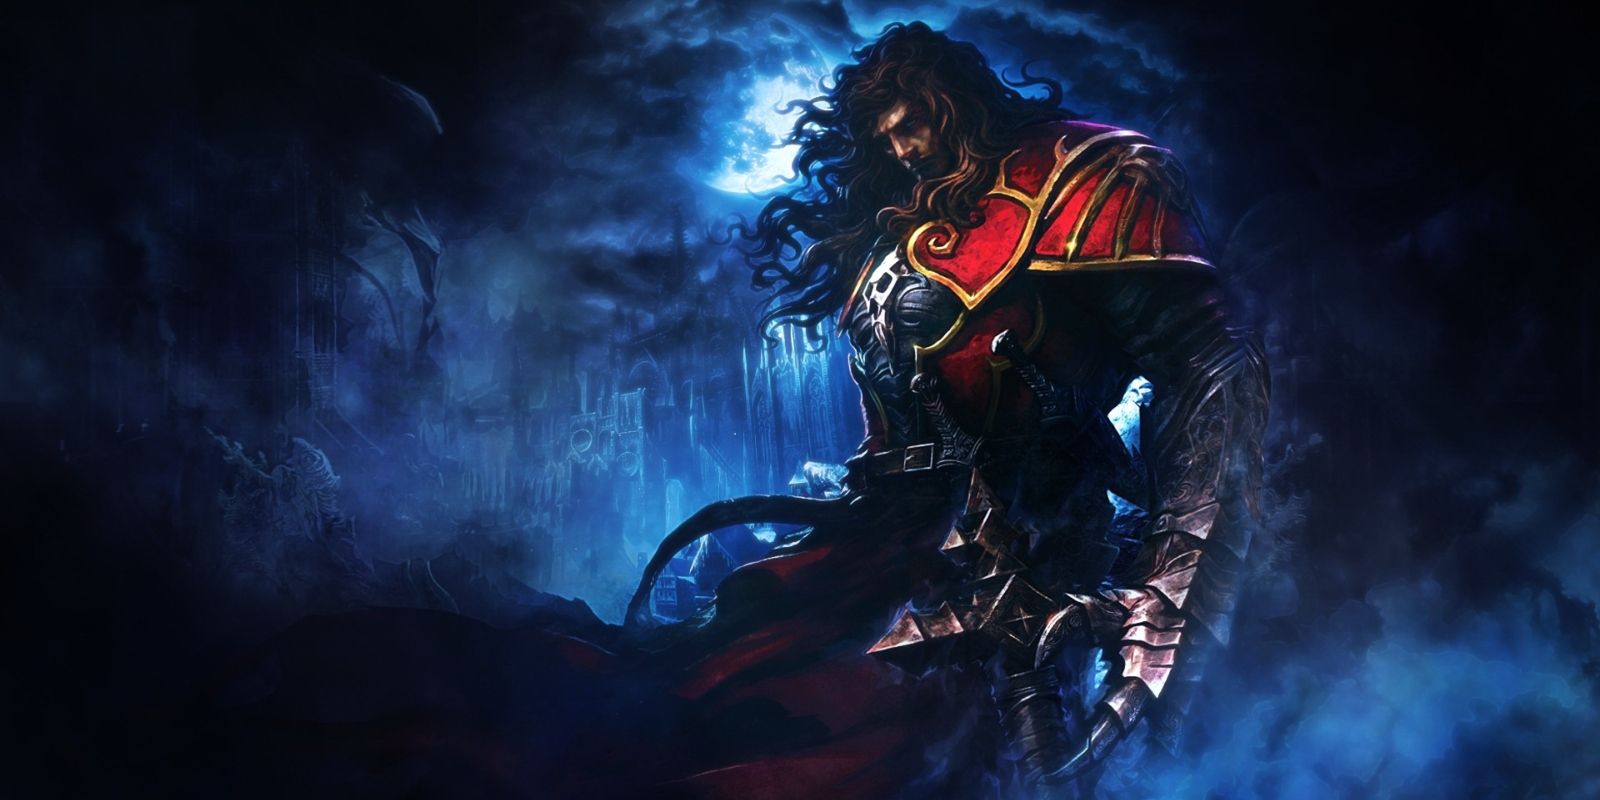 Castlevania: Lords of Shadow - Metacritic